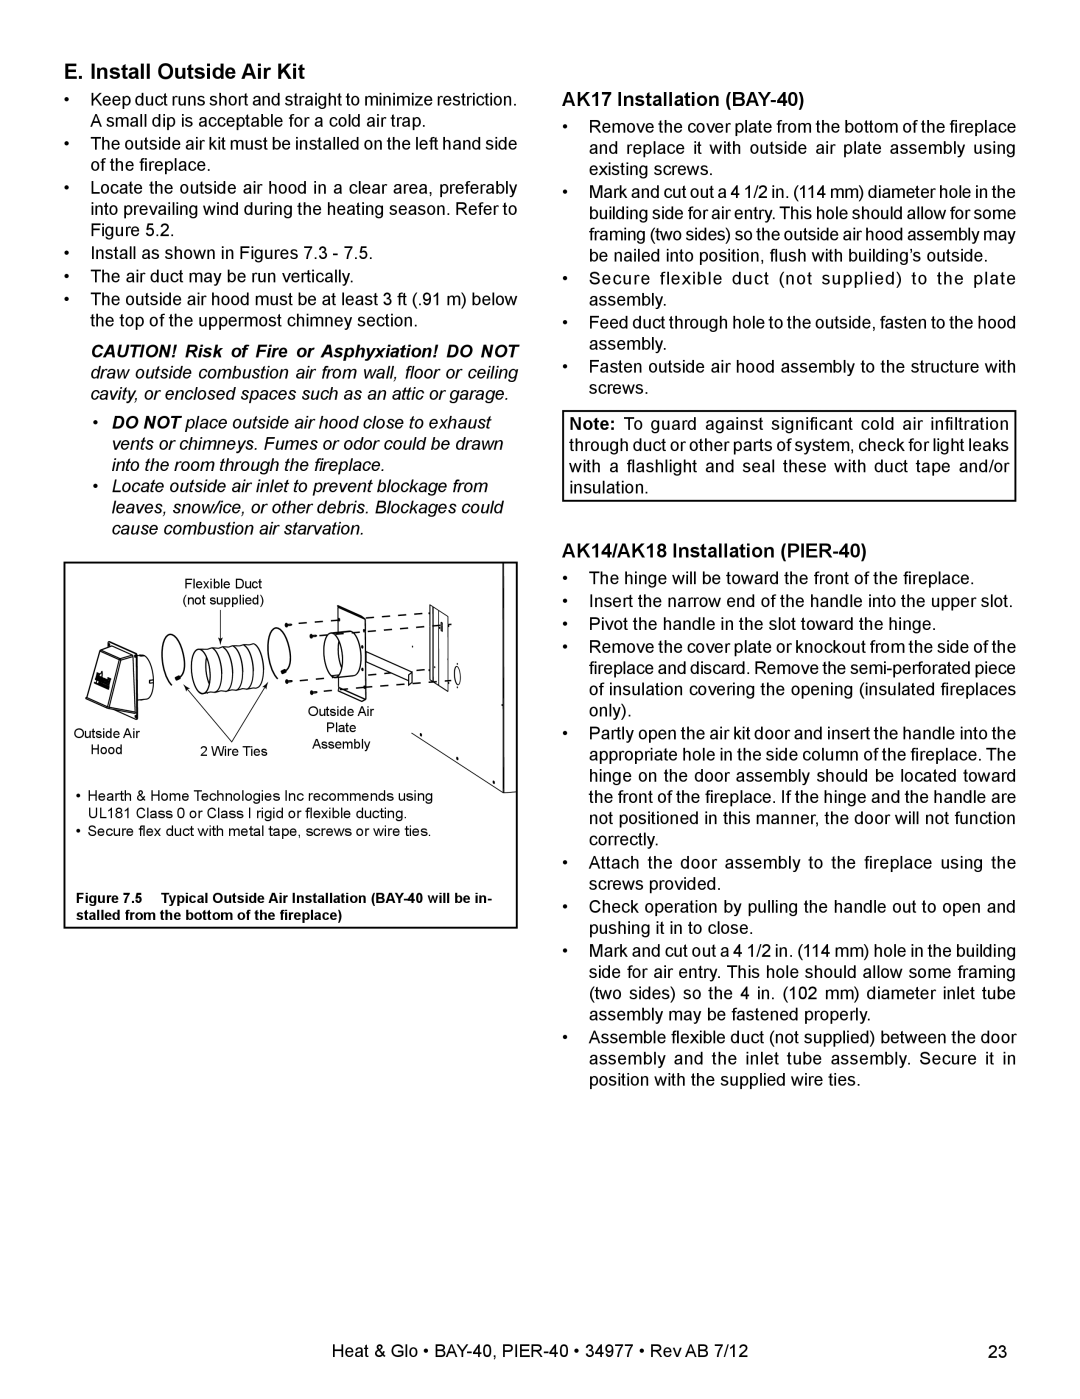 Heat & Glo LifeStyle owner manual E. Install Outside Air Kit, AK17 Installation BAY-40, AK14/AK18 Installation PIER-40 